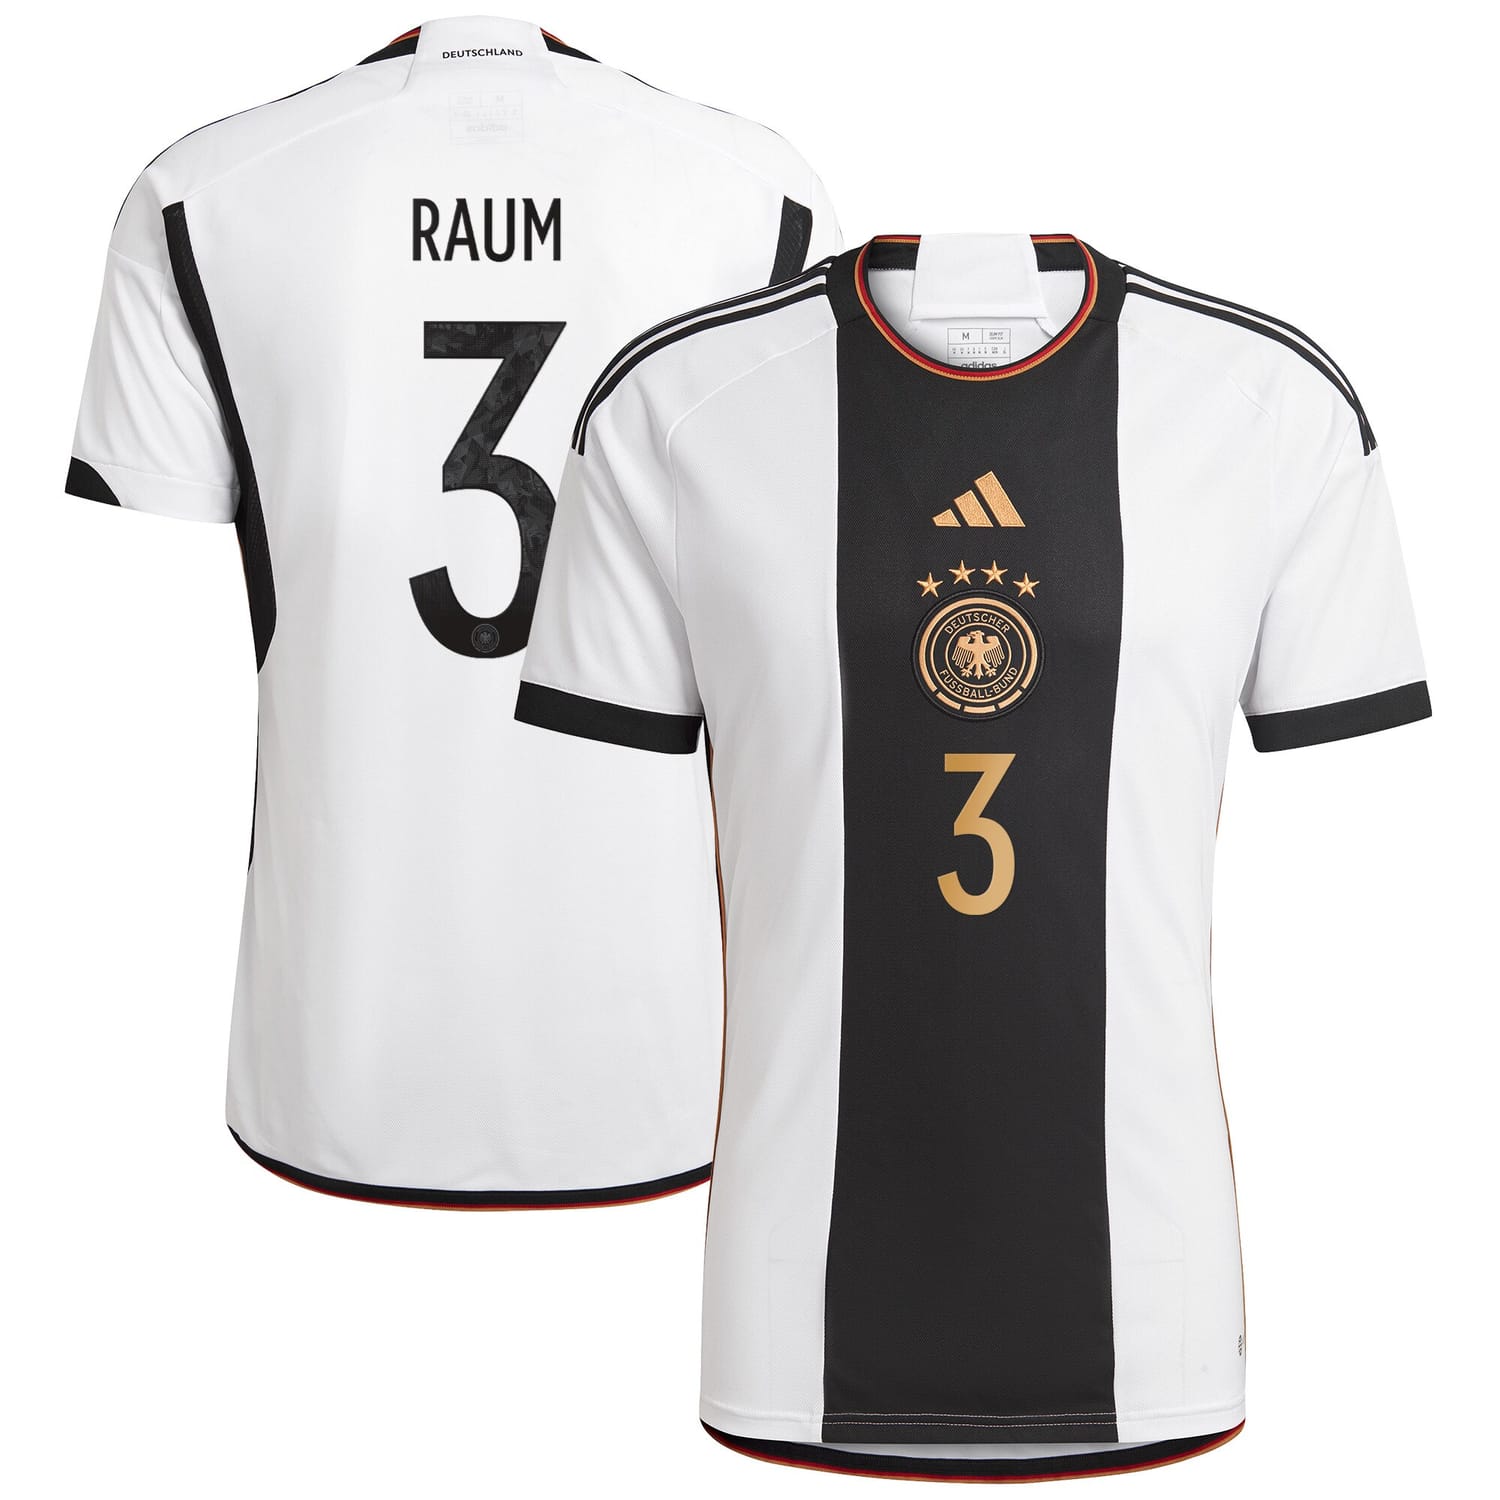 Germany National Team Home Jersey Shirt player David Raum 3 printing for Men